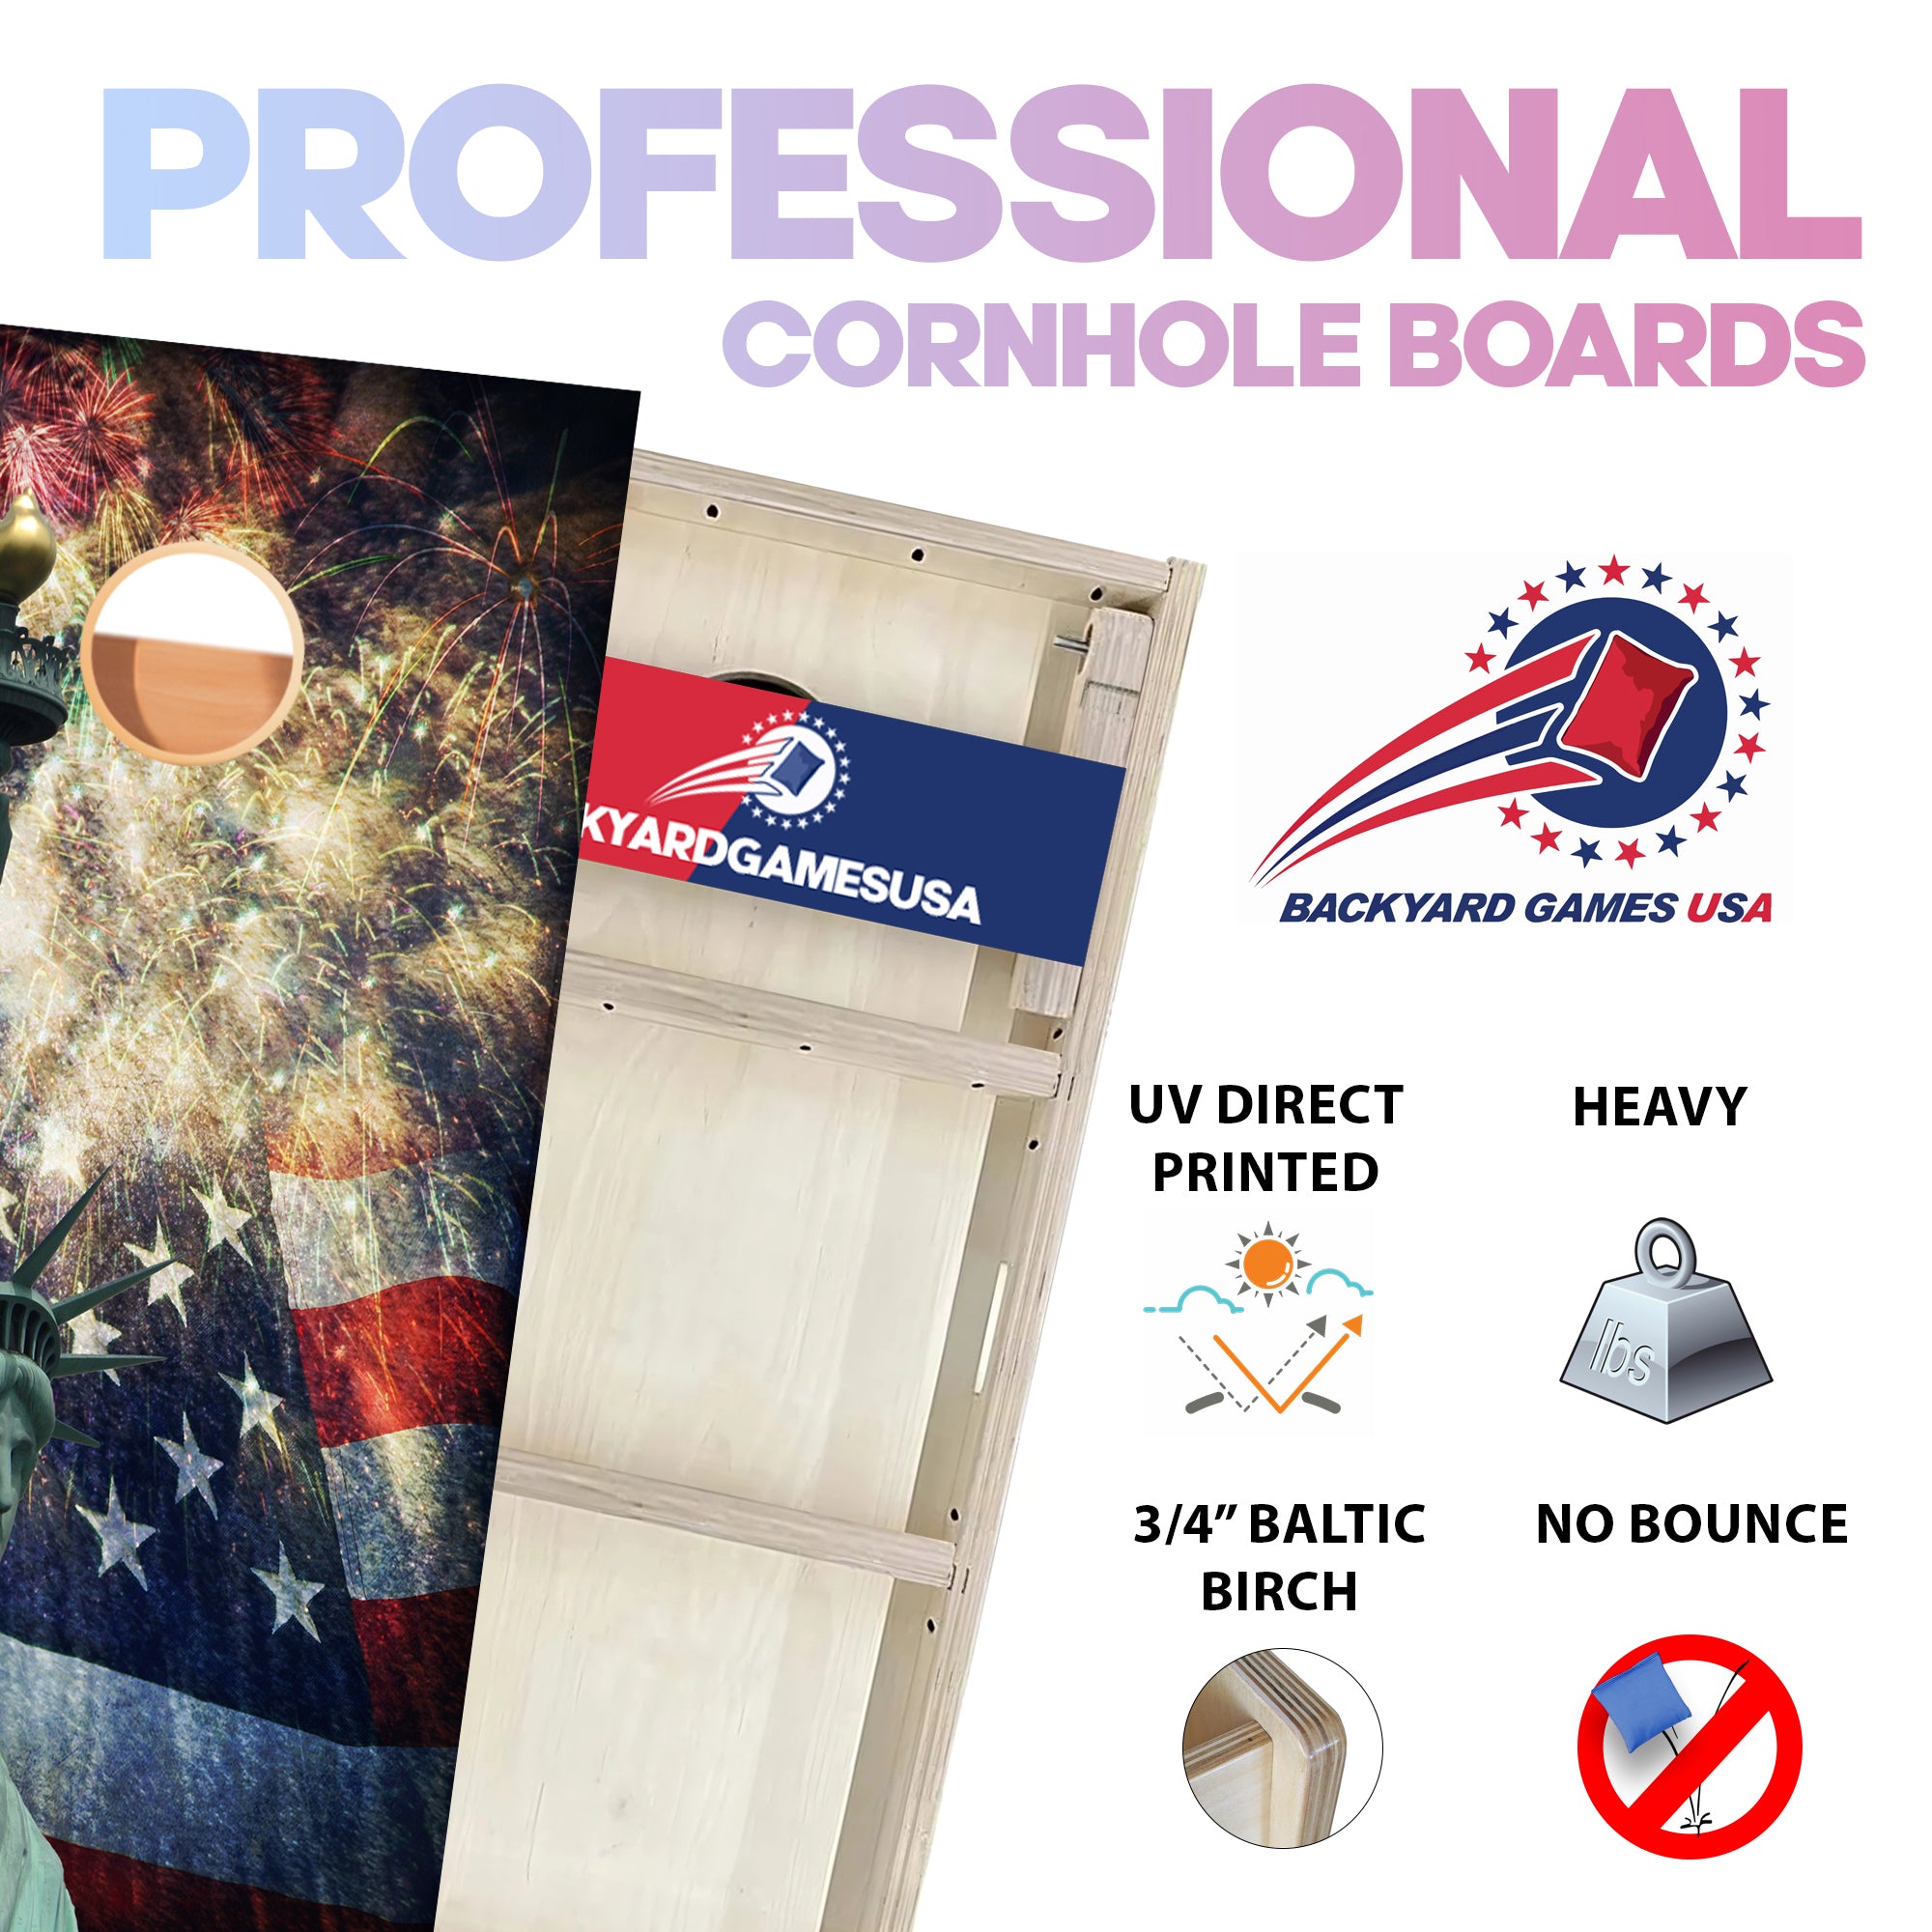 Statue of Liberty Professional Cornhole Boards